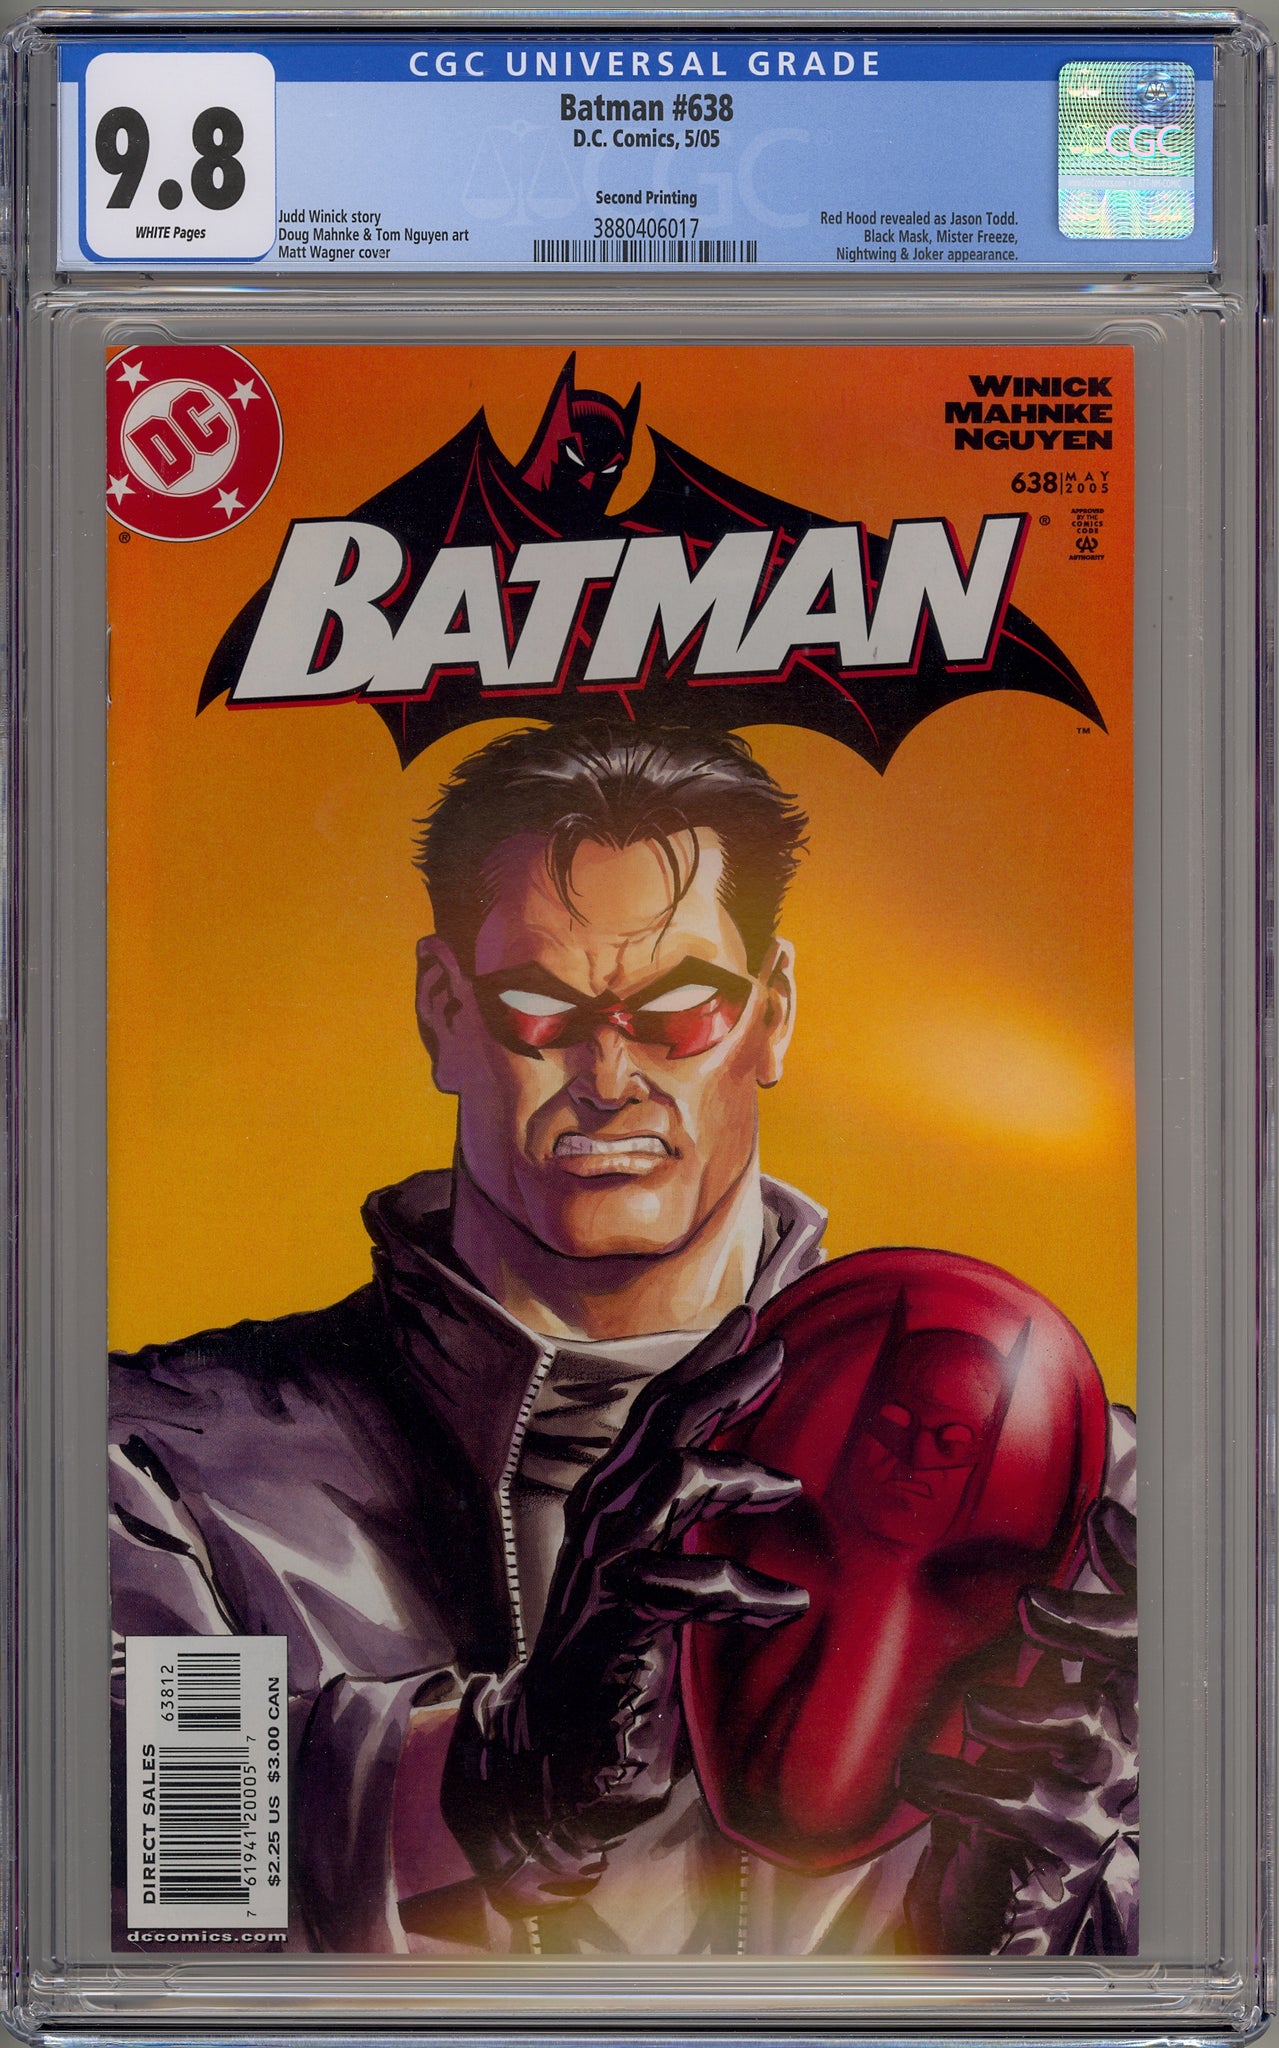 Batman #638 (2005) Red Hood, Black Mask, Mr. Freeze, Nightwing, Joker